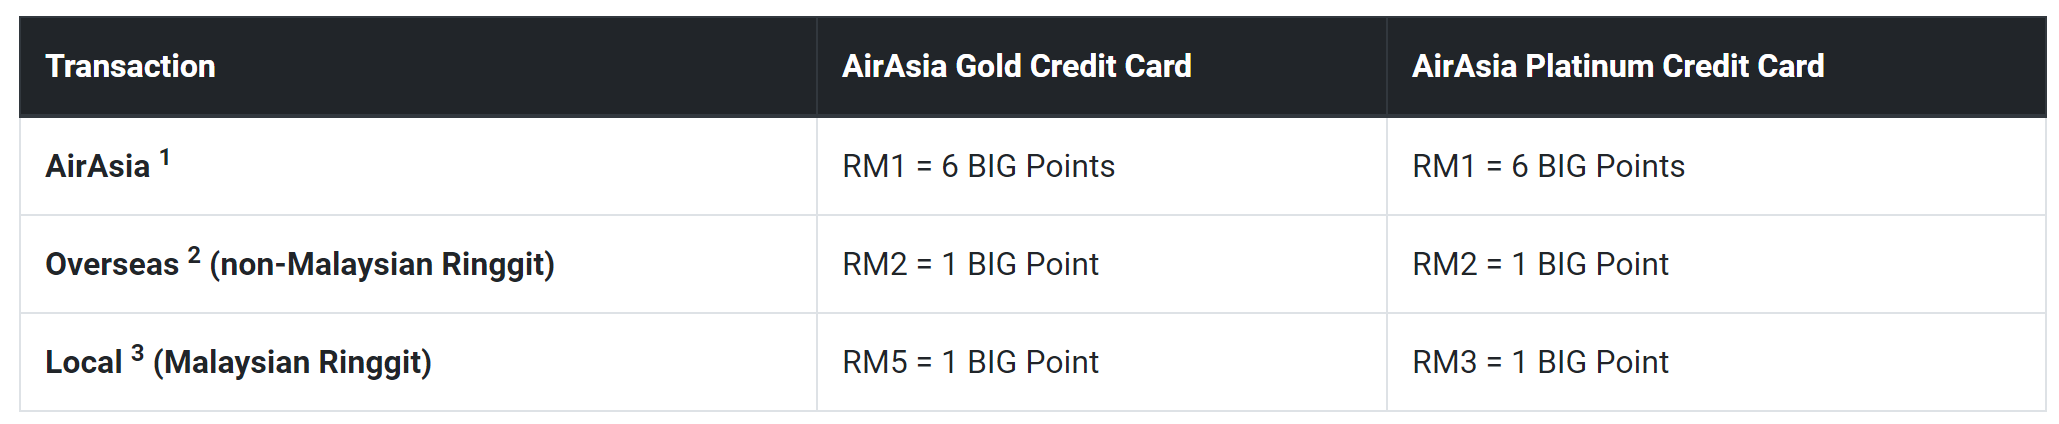 AirAsia Credit Card.PNG